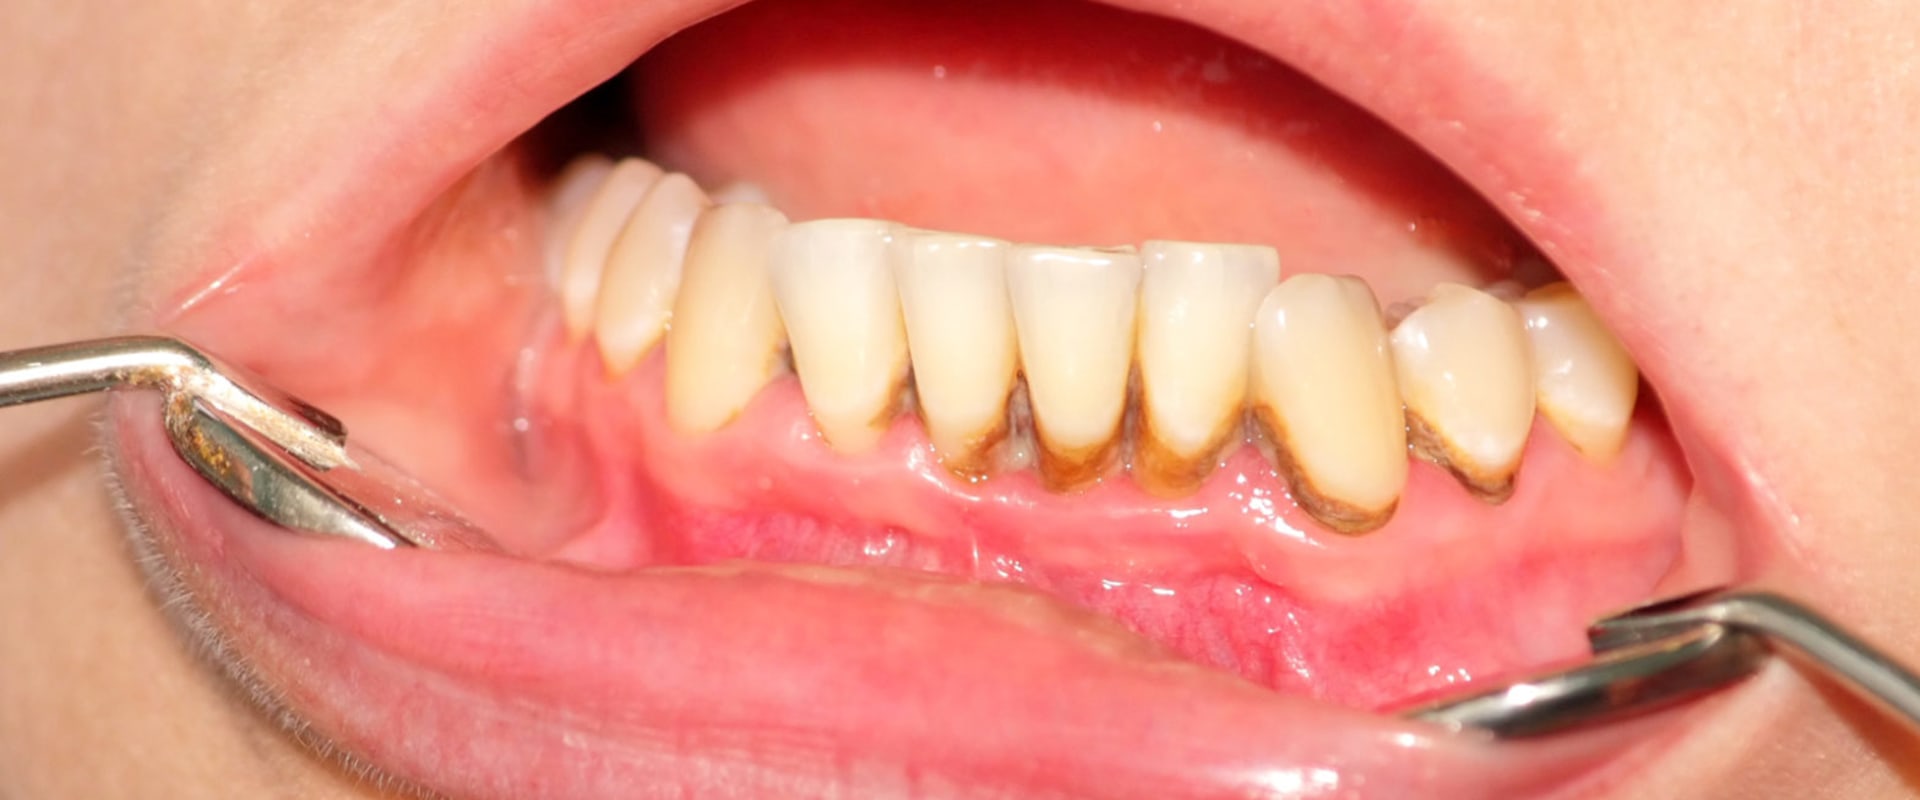 How will a dentist remove tartar?